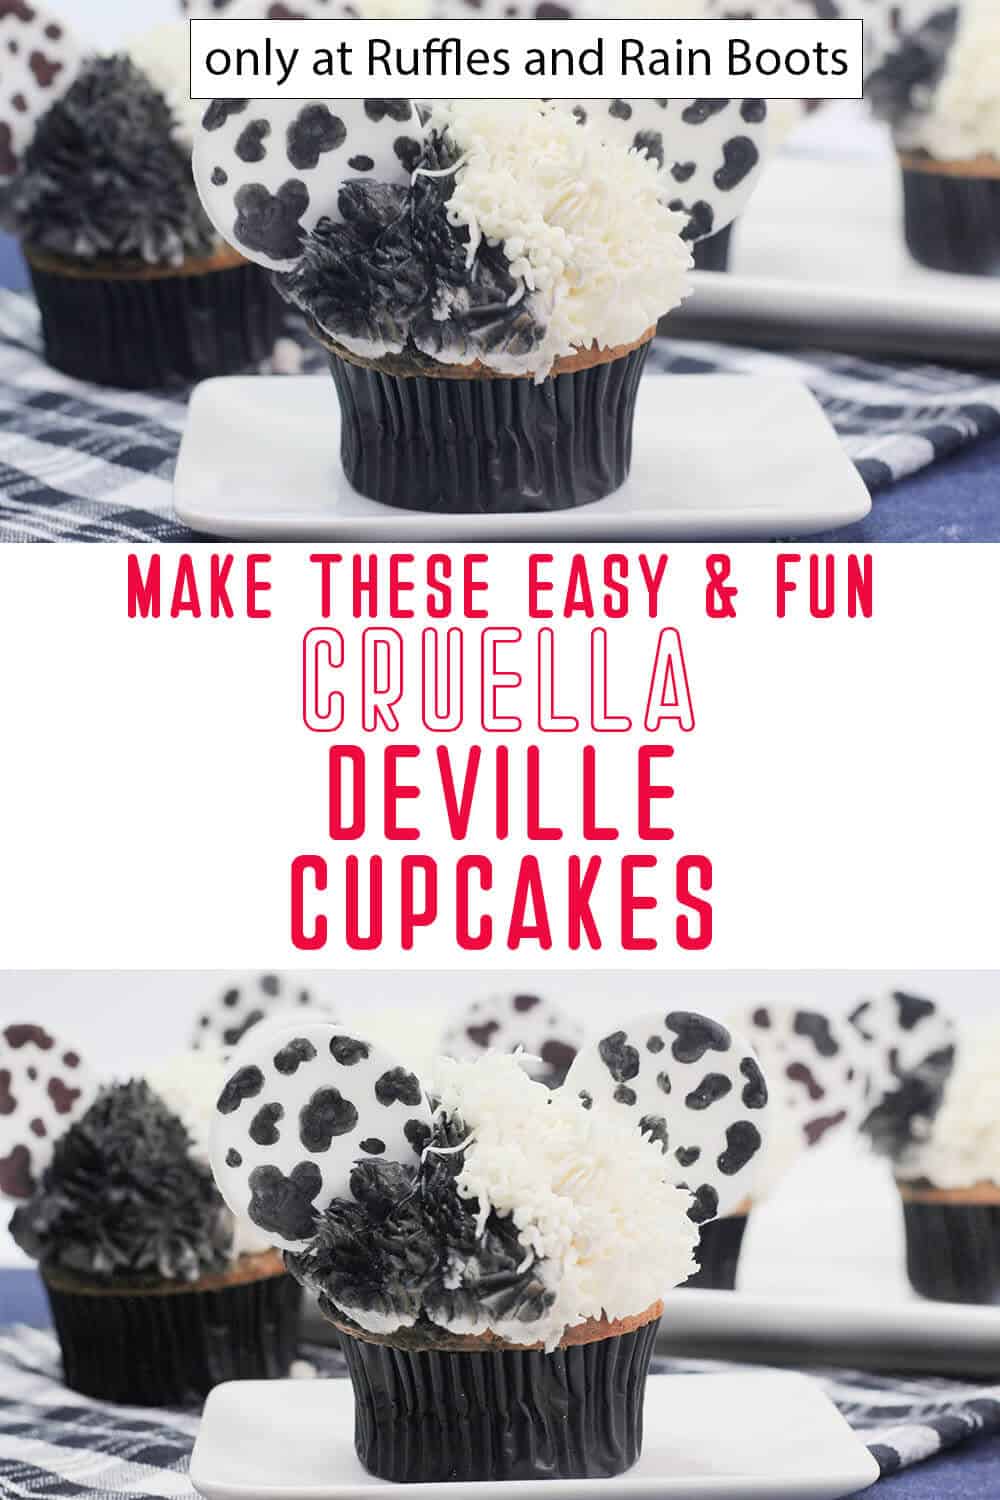 photo collage disney cruella deville cupcakes with text which reads make these easy & fun cruella deville cupcakes